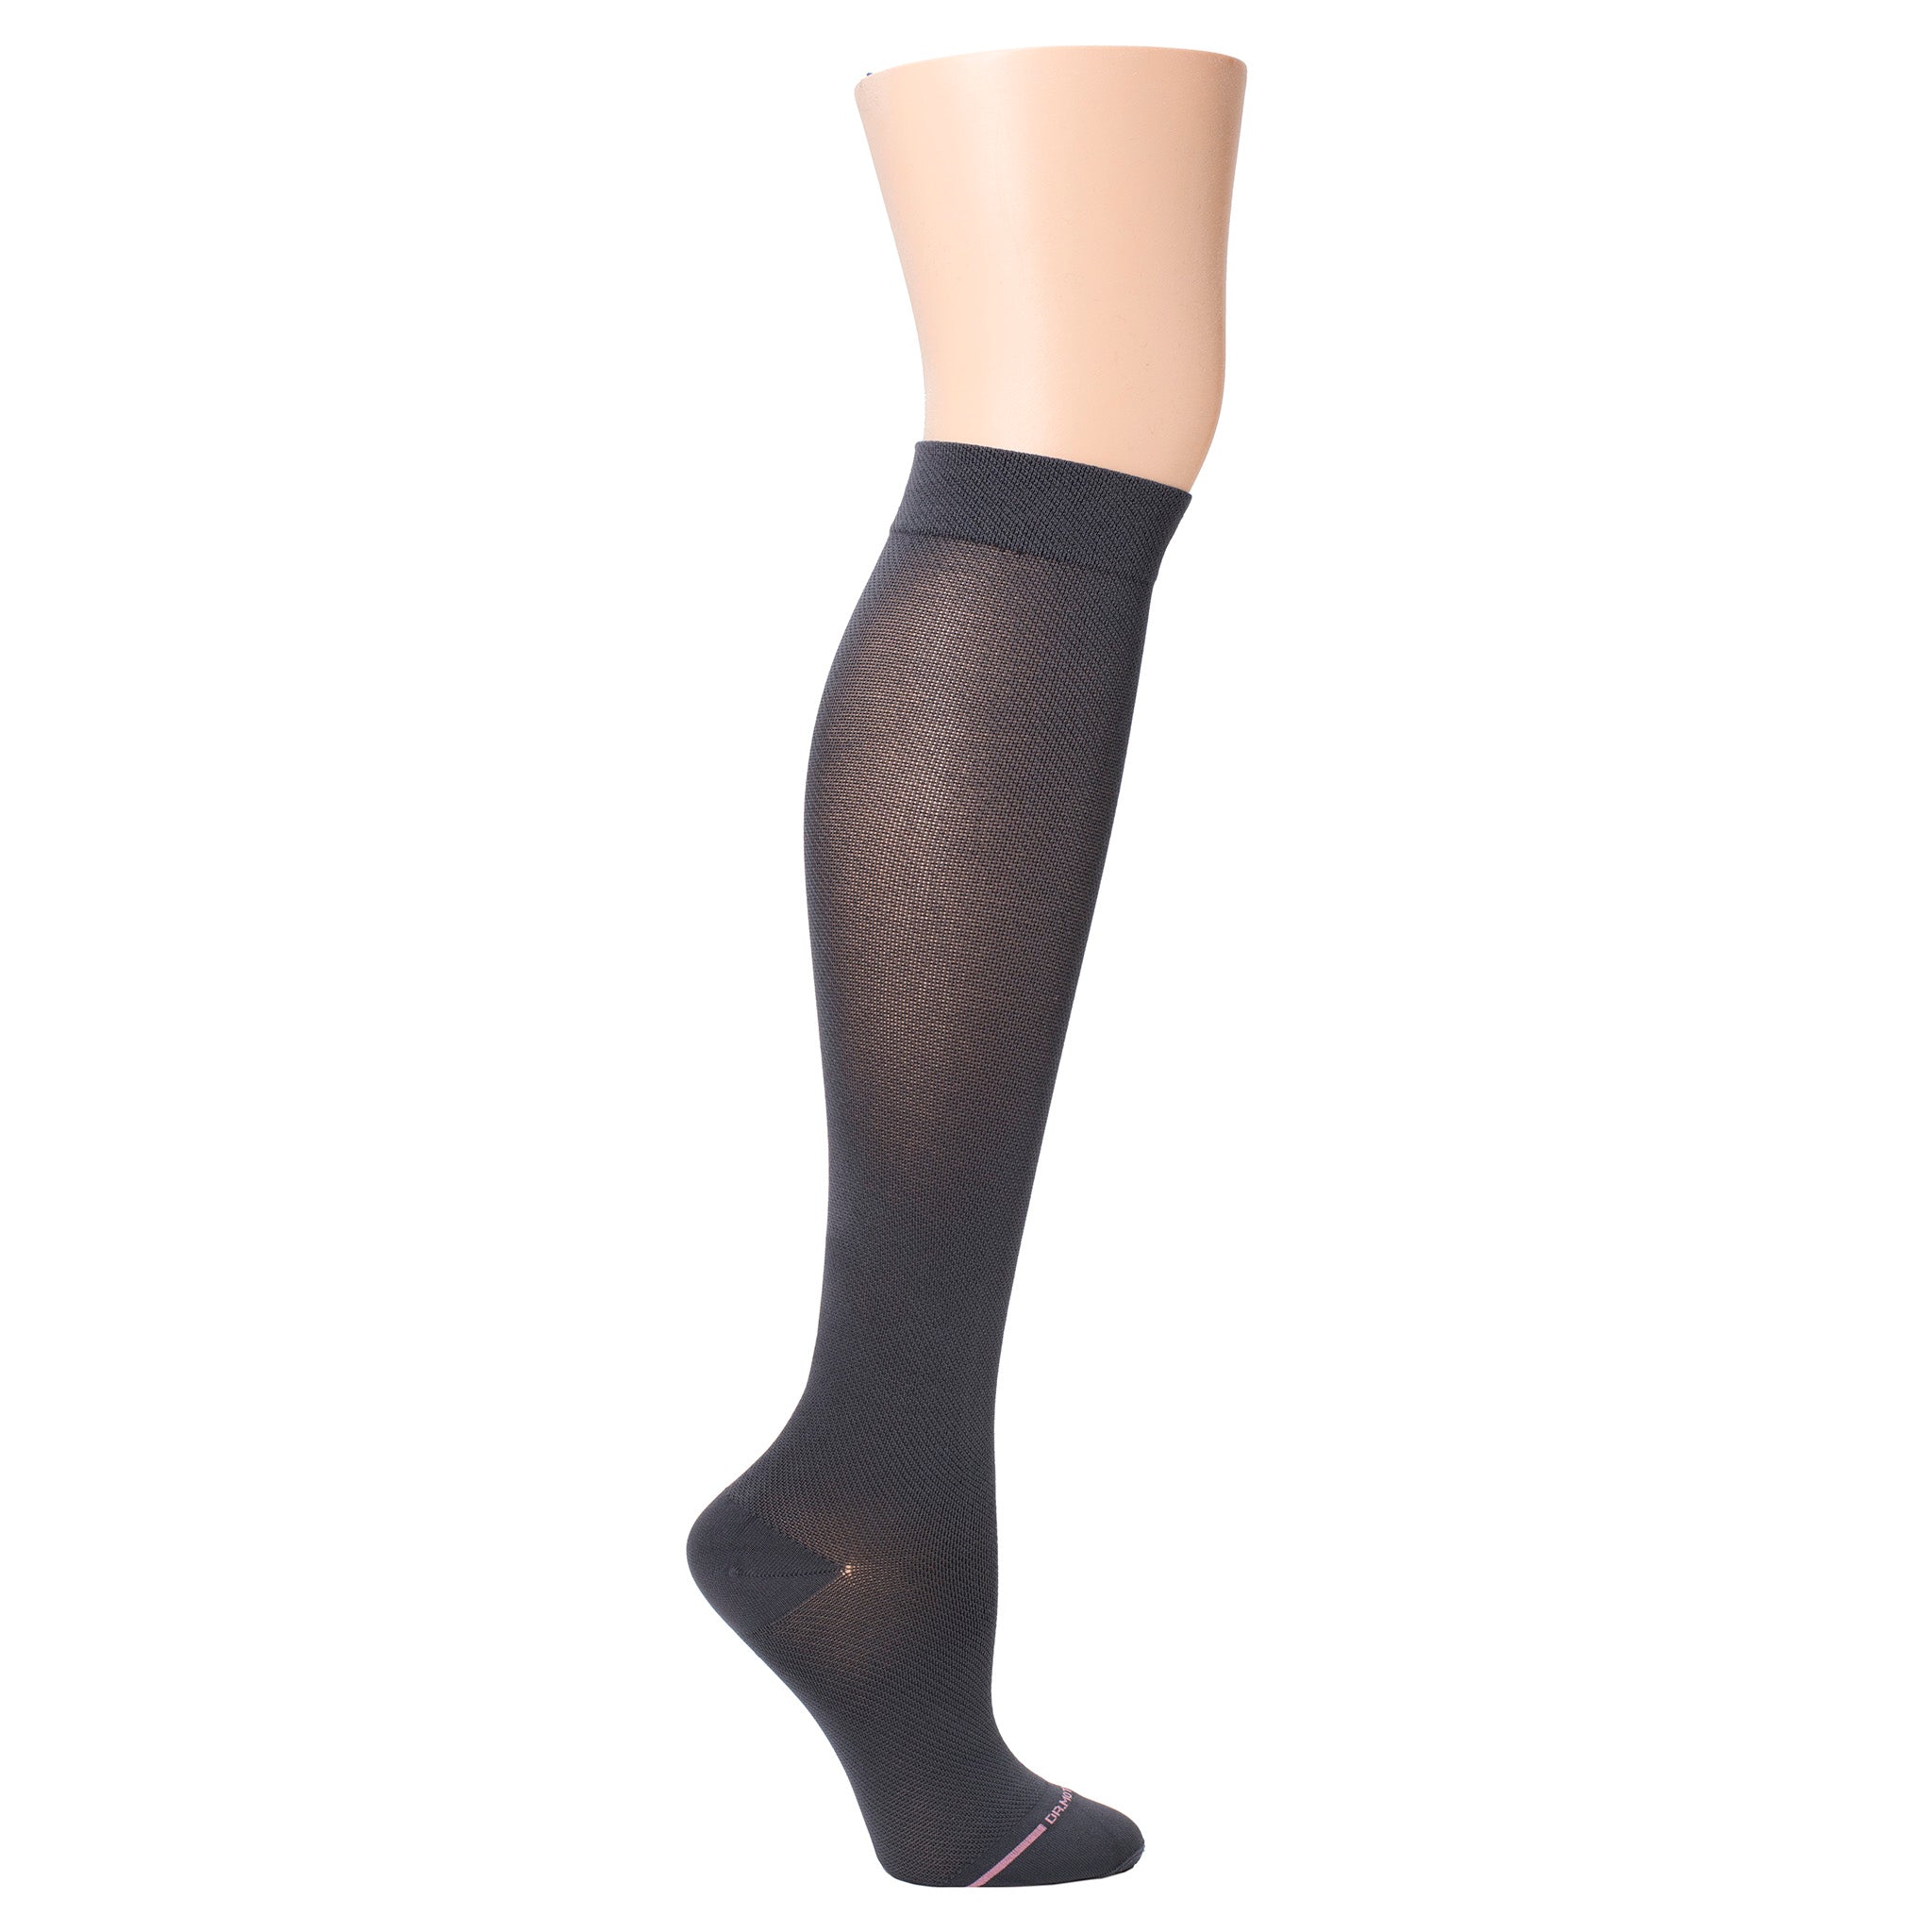 Solid Lightweight | Knee-High Compression Socks For Women